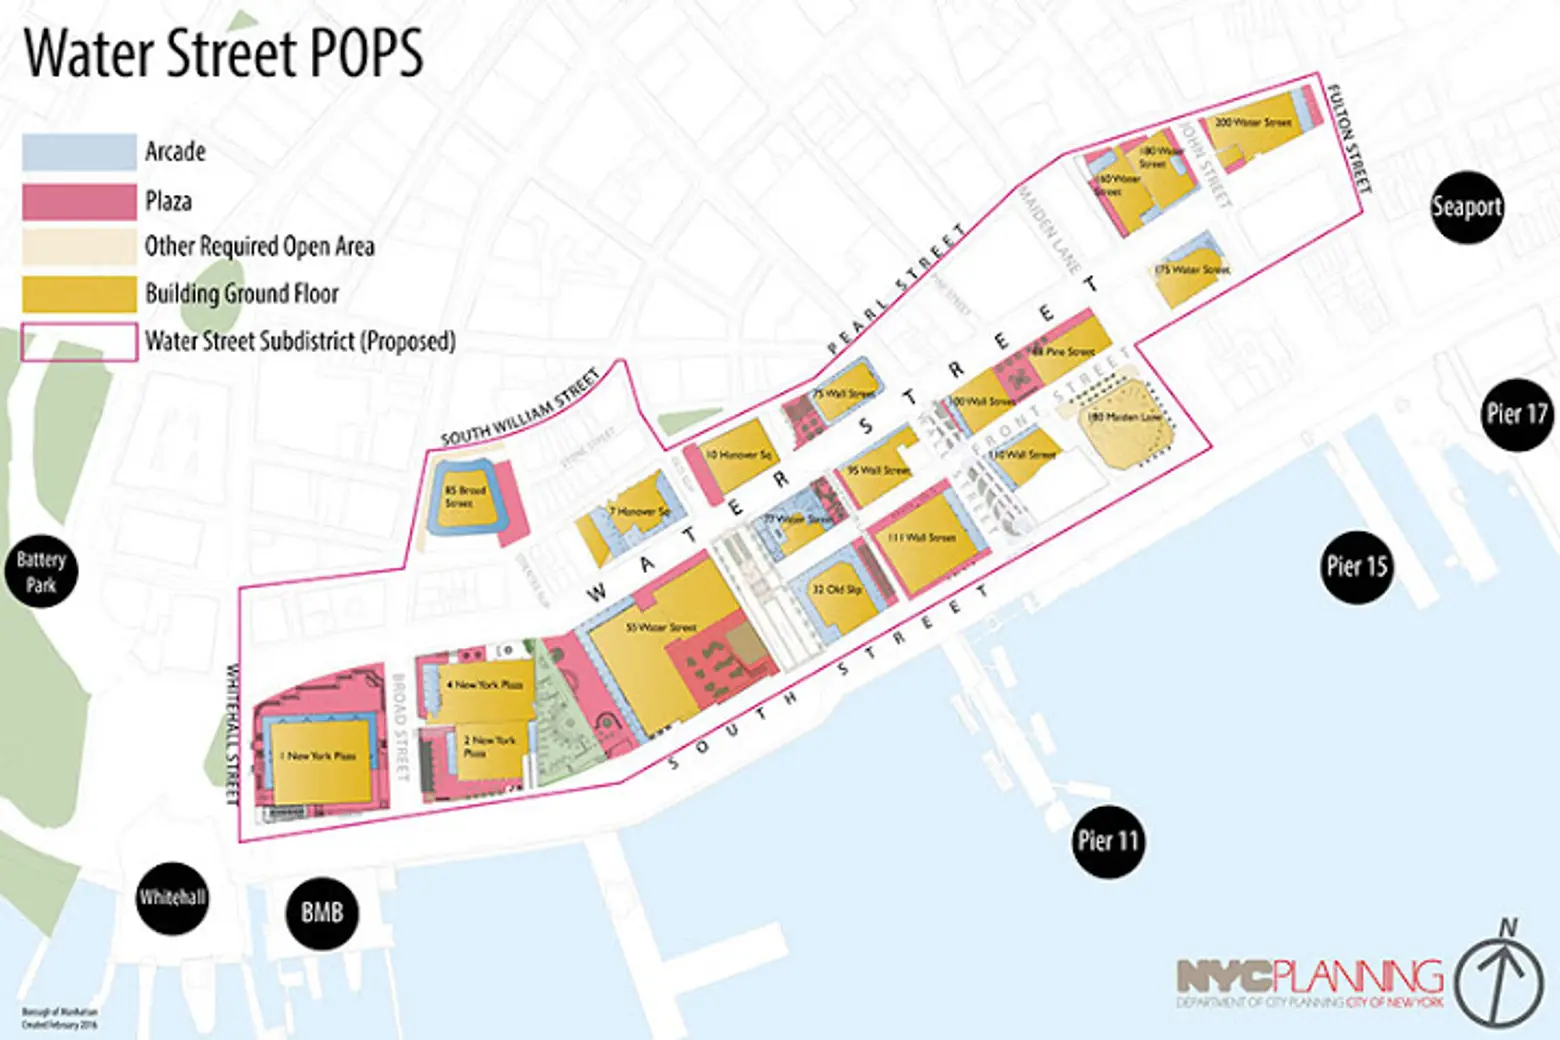 Flood regulations may thwart plan to convert Lower Manhattan public spaces to retail